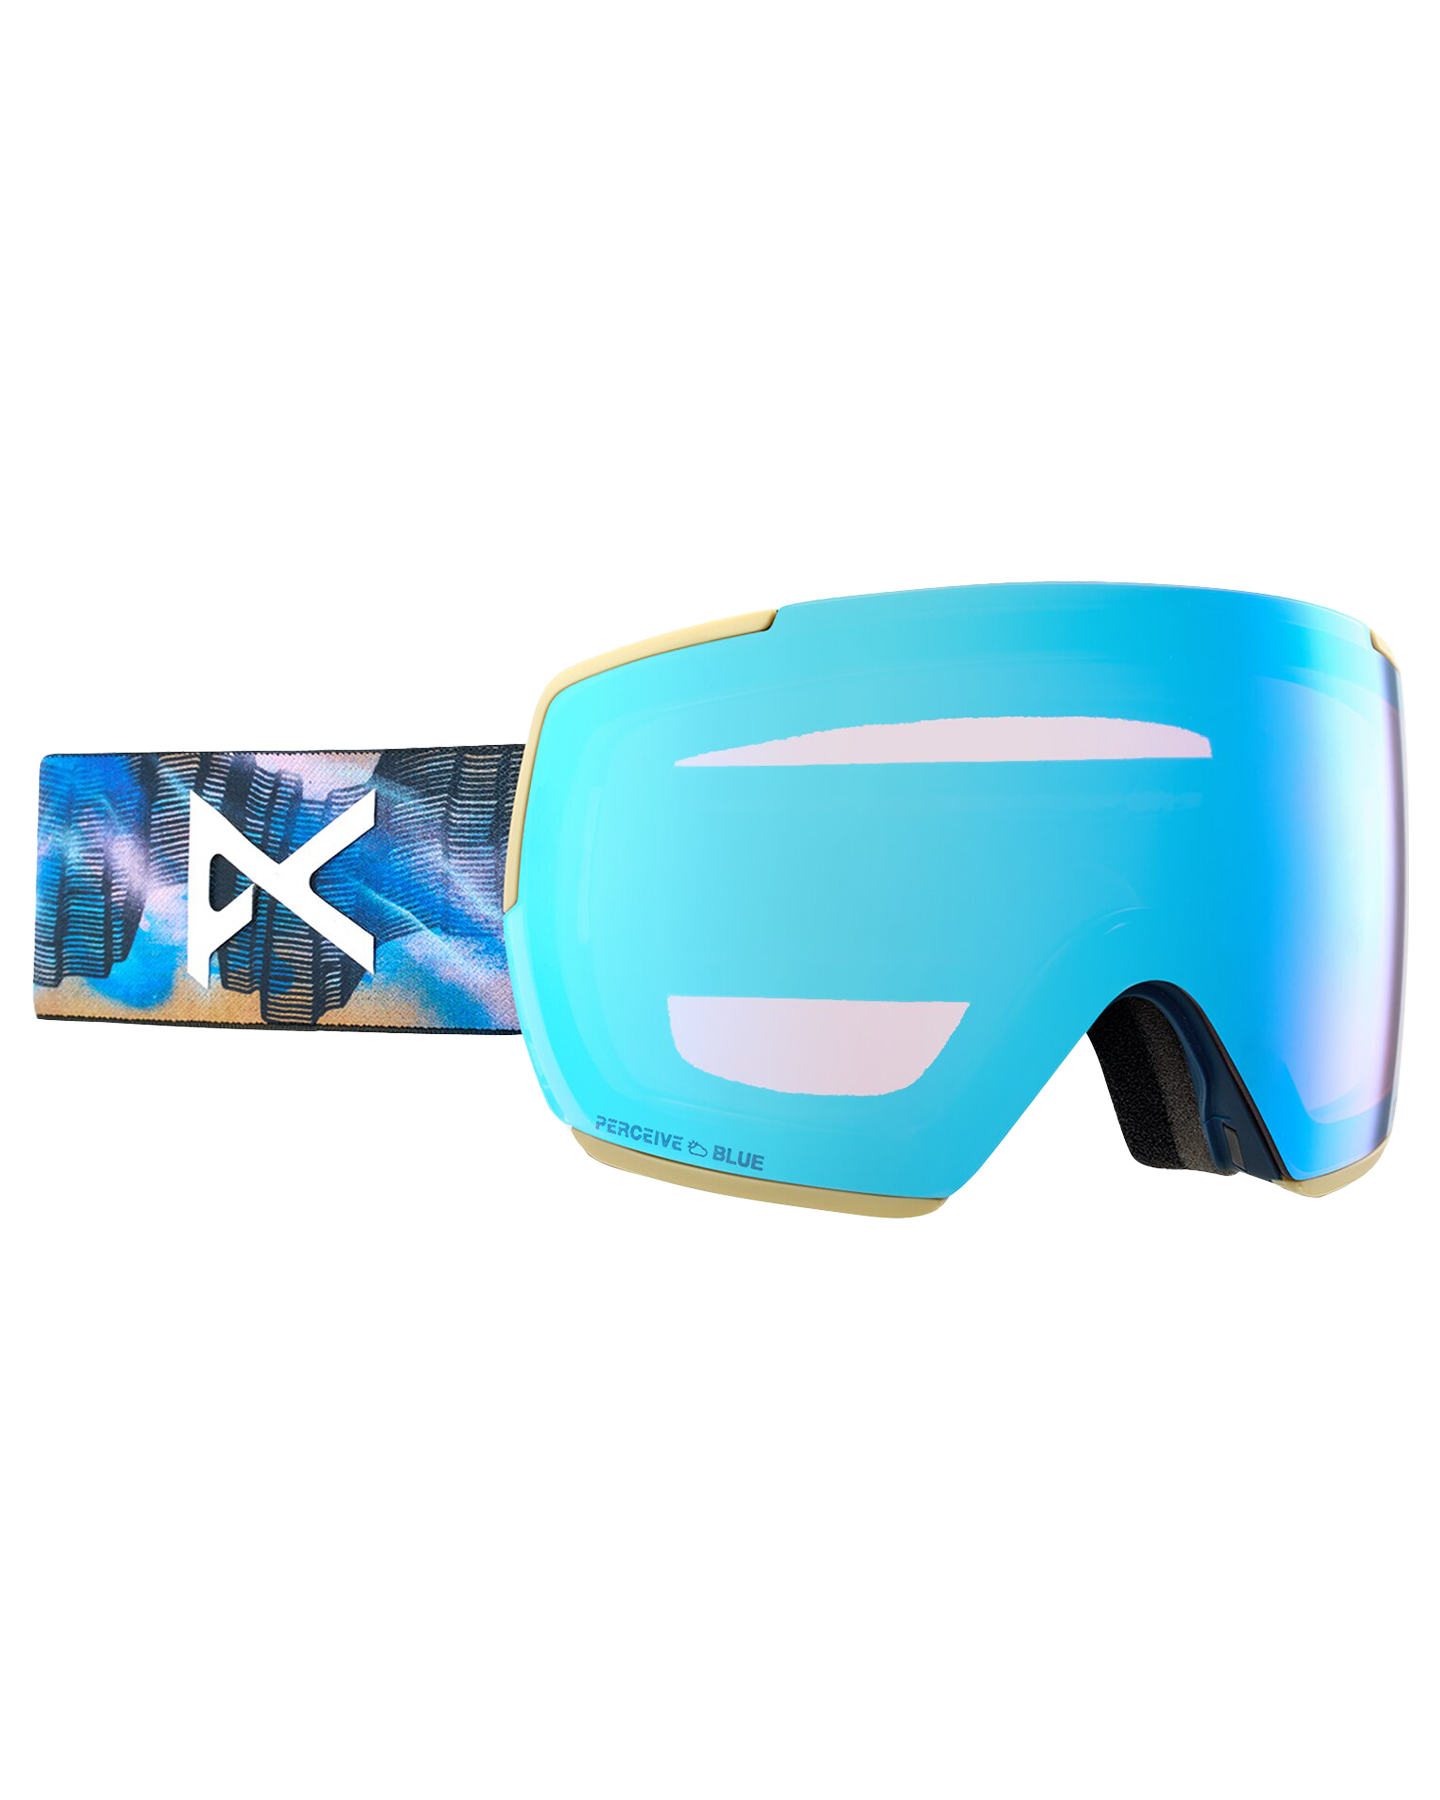 Anon M5 Low Bridge Snow Goggles - Chet Malinow/Perceive Variable Blue Lens Snow Goggles - Mens - Trojan Wake Ski Snow